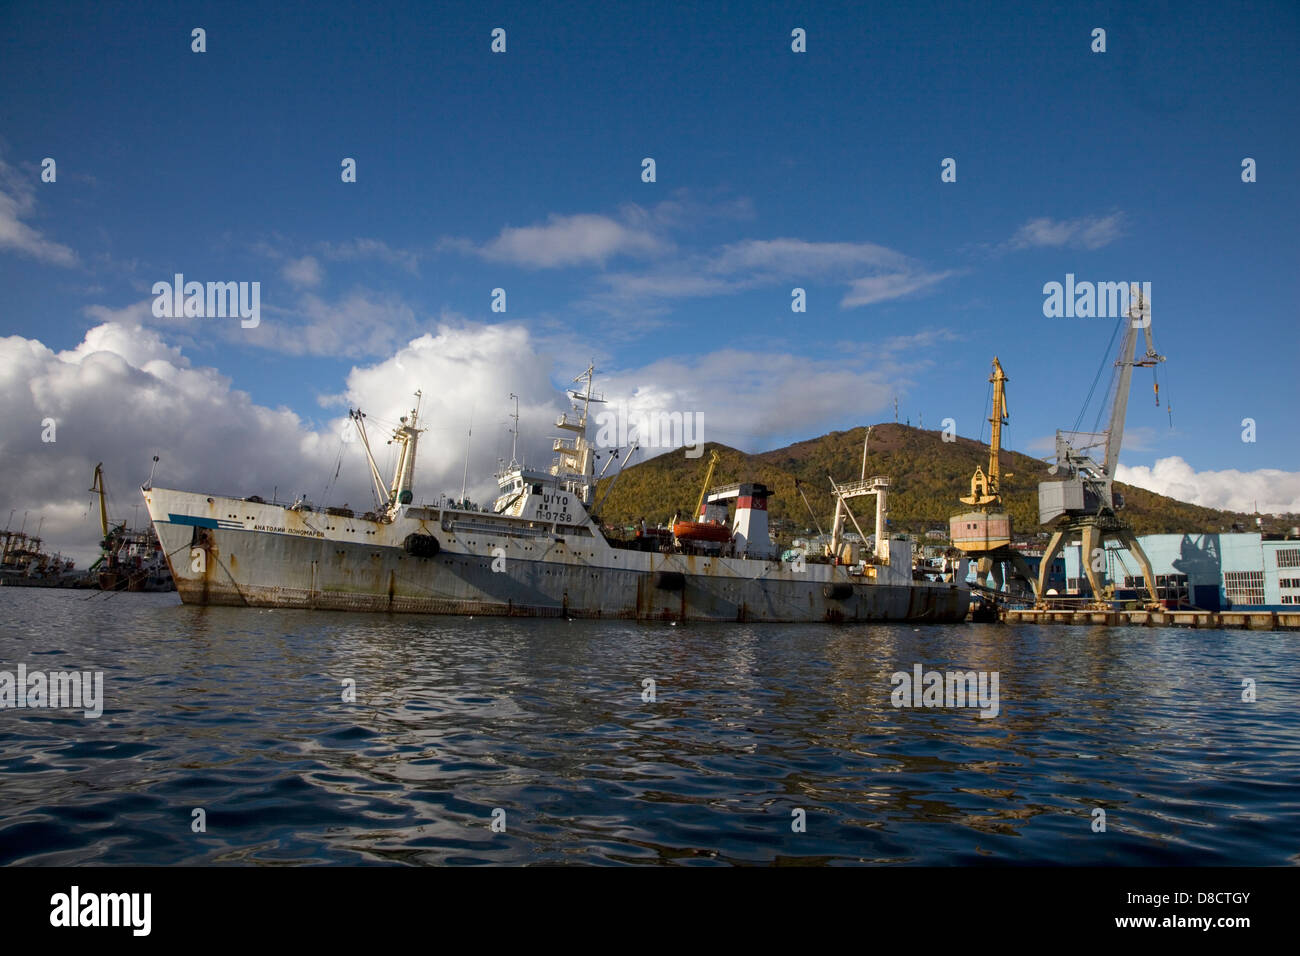 Petropavlovsk - Kamchatsky harbour in Avachinskaya Bay, Russia. Stock Photo